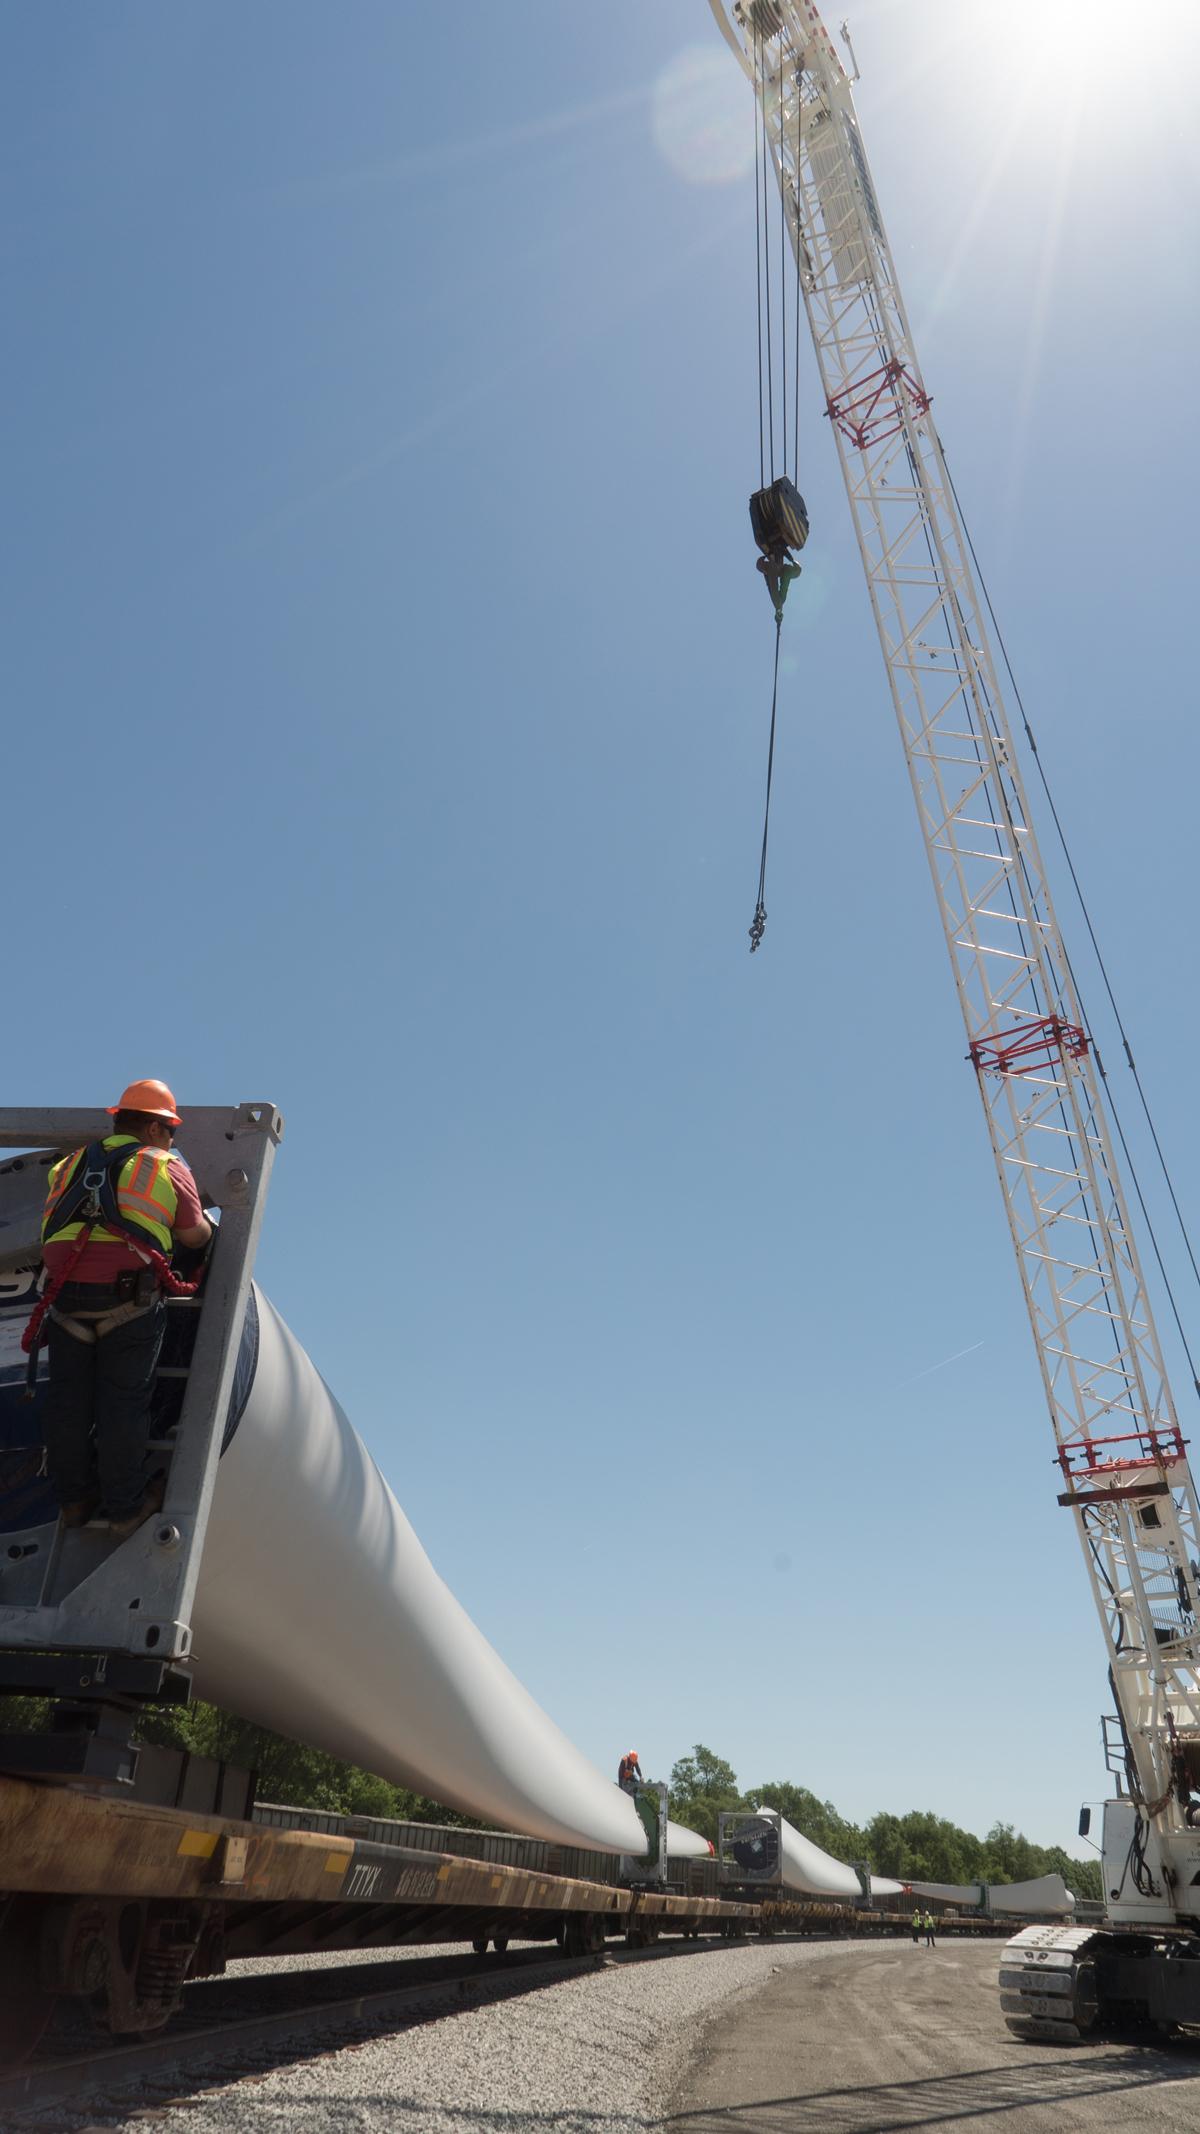 Unloading components to build a wind turbine farm near Des Moines, Iowa.